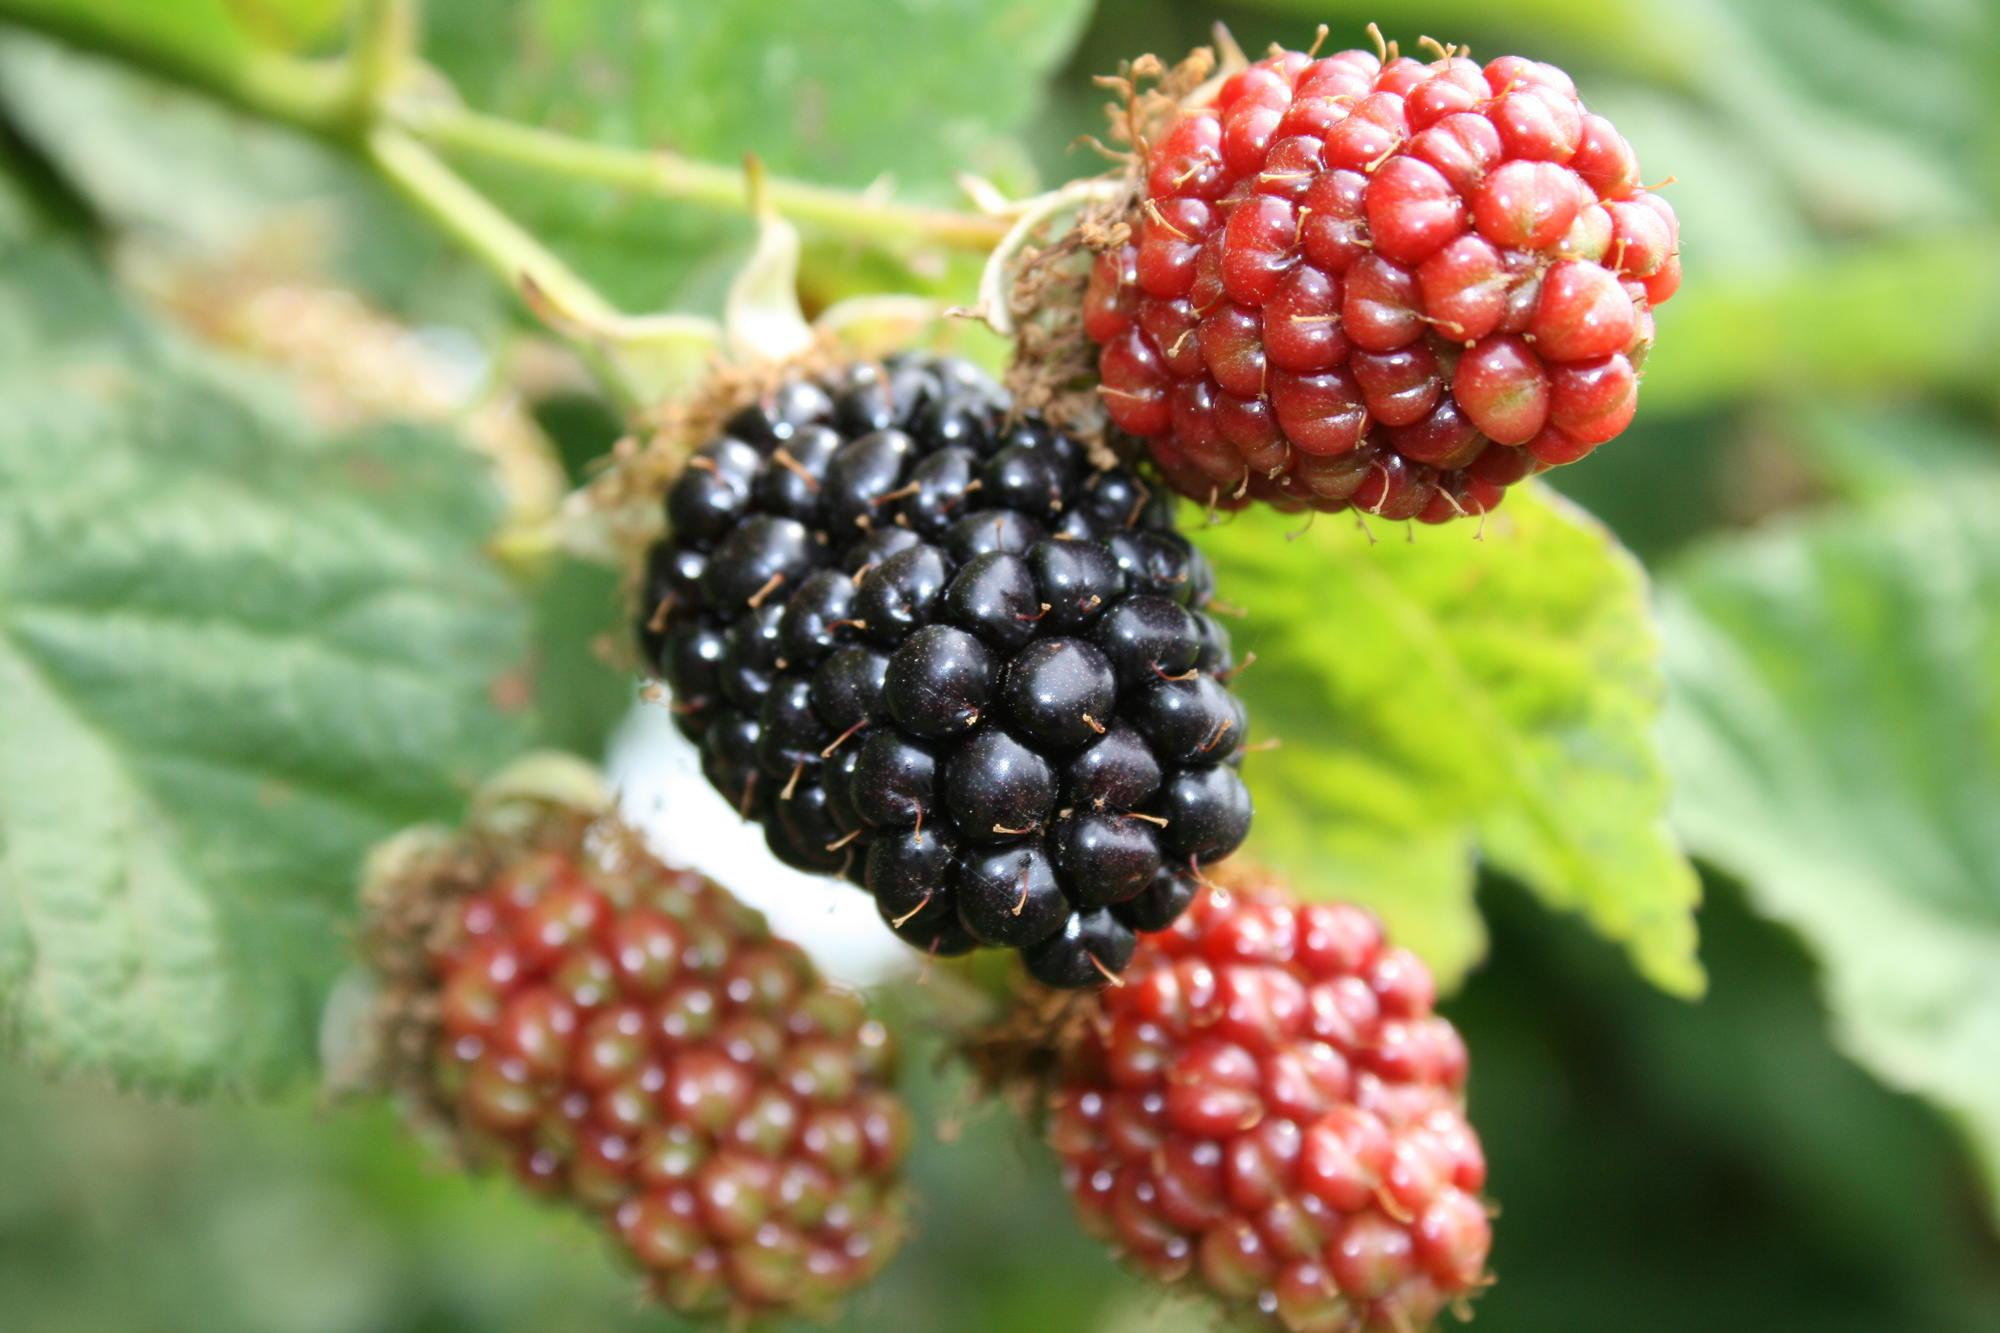 developing and ripe blackberries